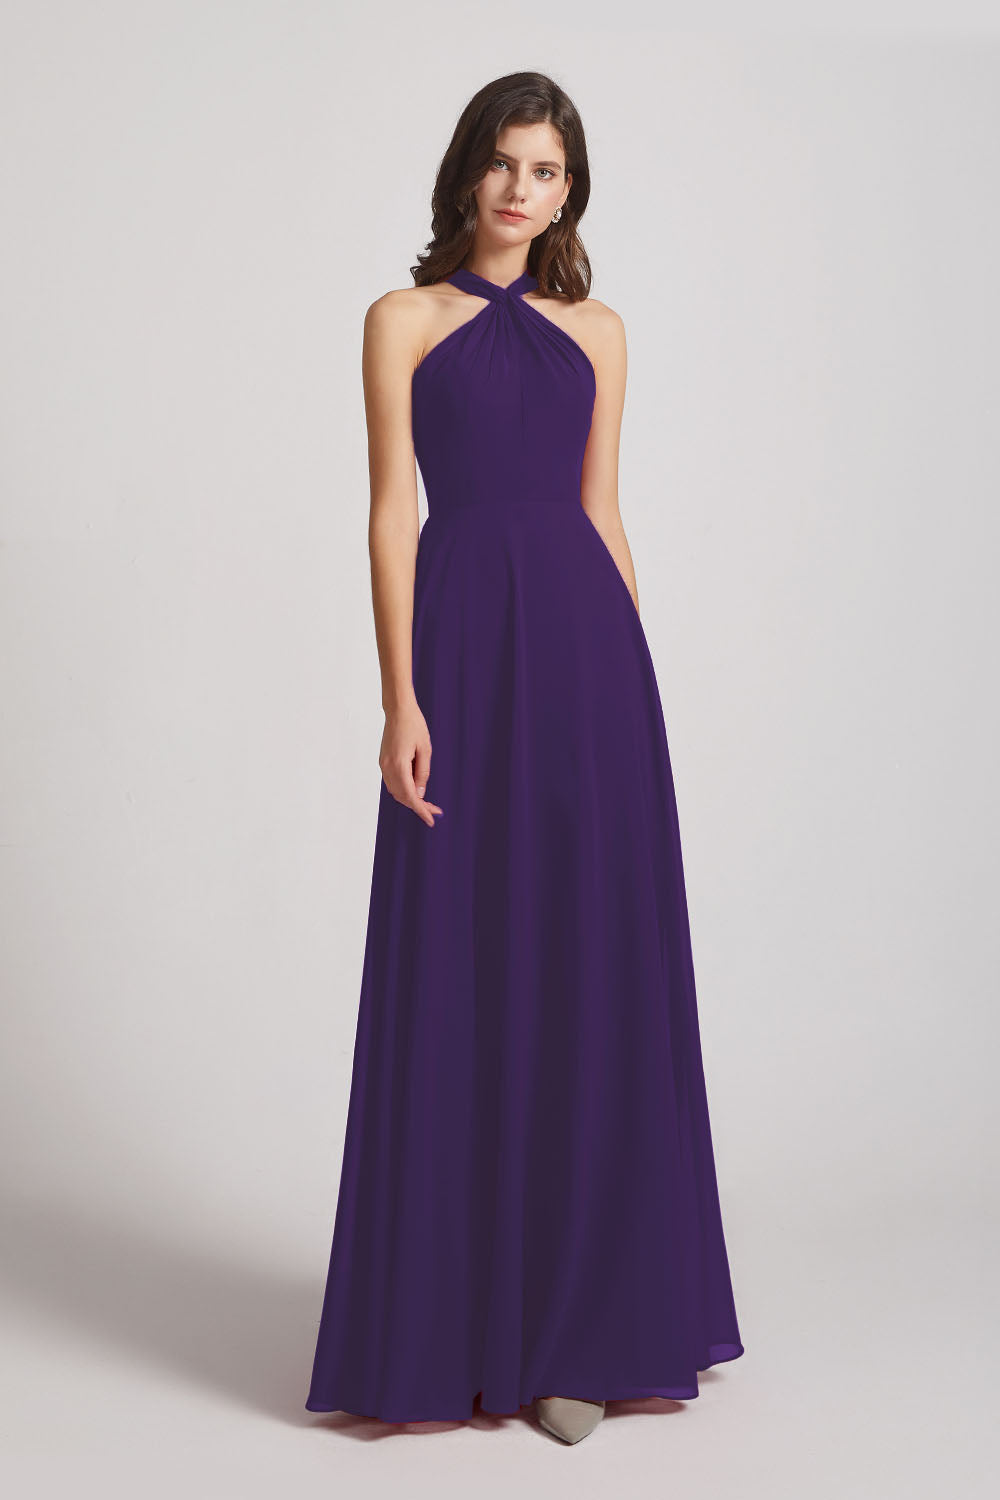 Alfa Bridal Purple Floor Length Chiffon Bridesmaid Dresses with Criss Cross Neckline (AF0113)